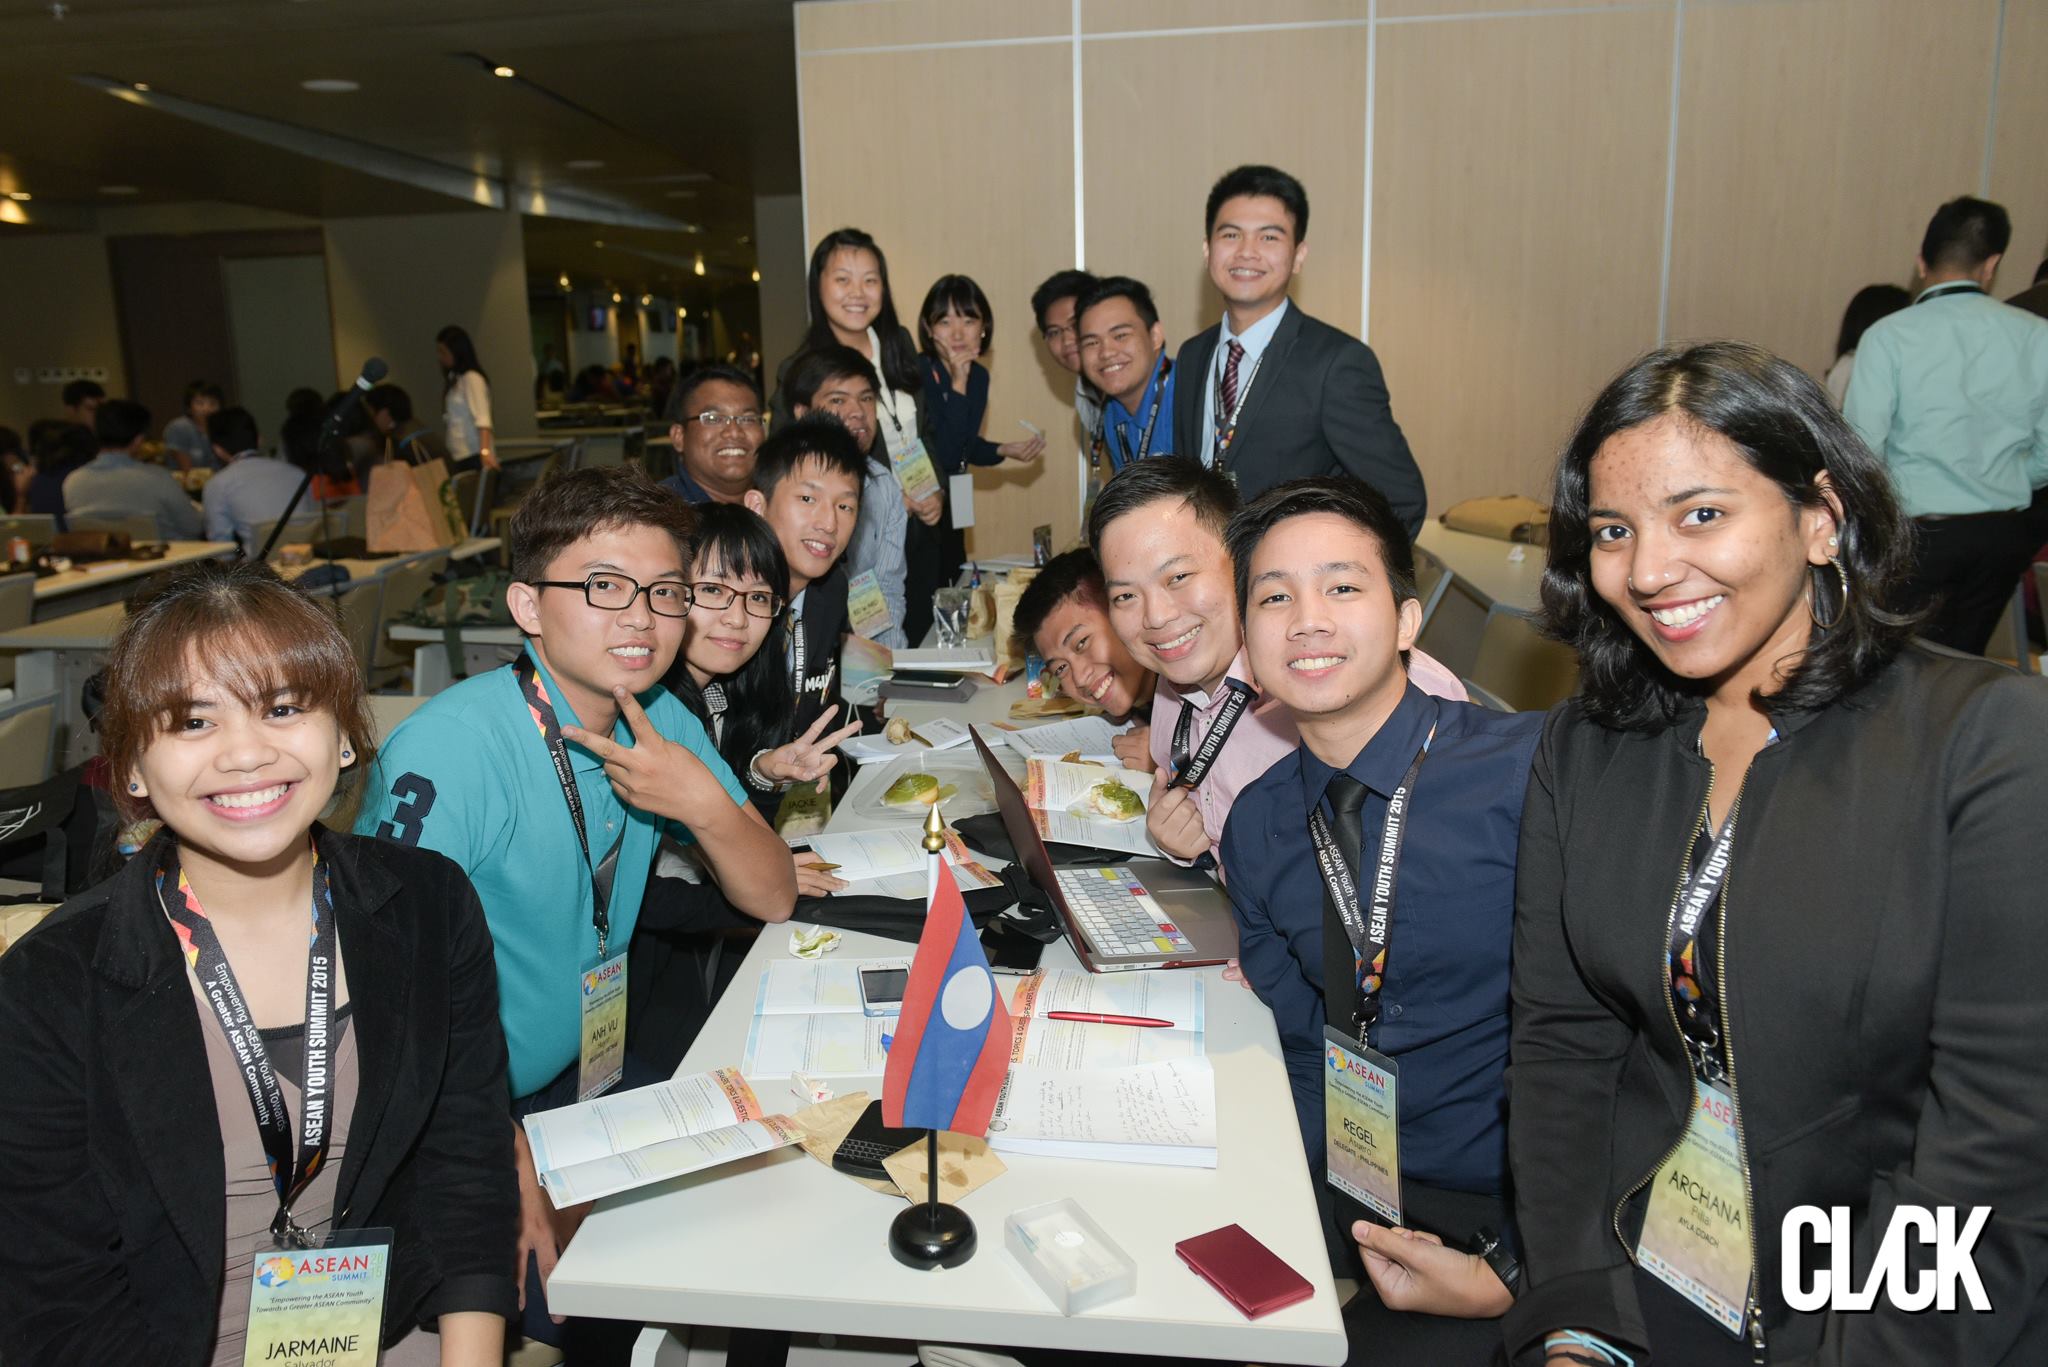 ASEAN Youth Summit, as AYLA Coach